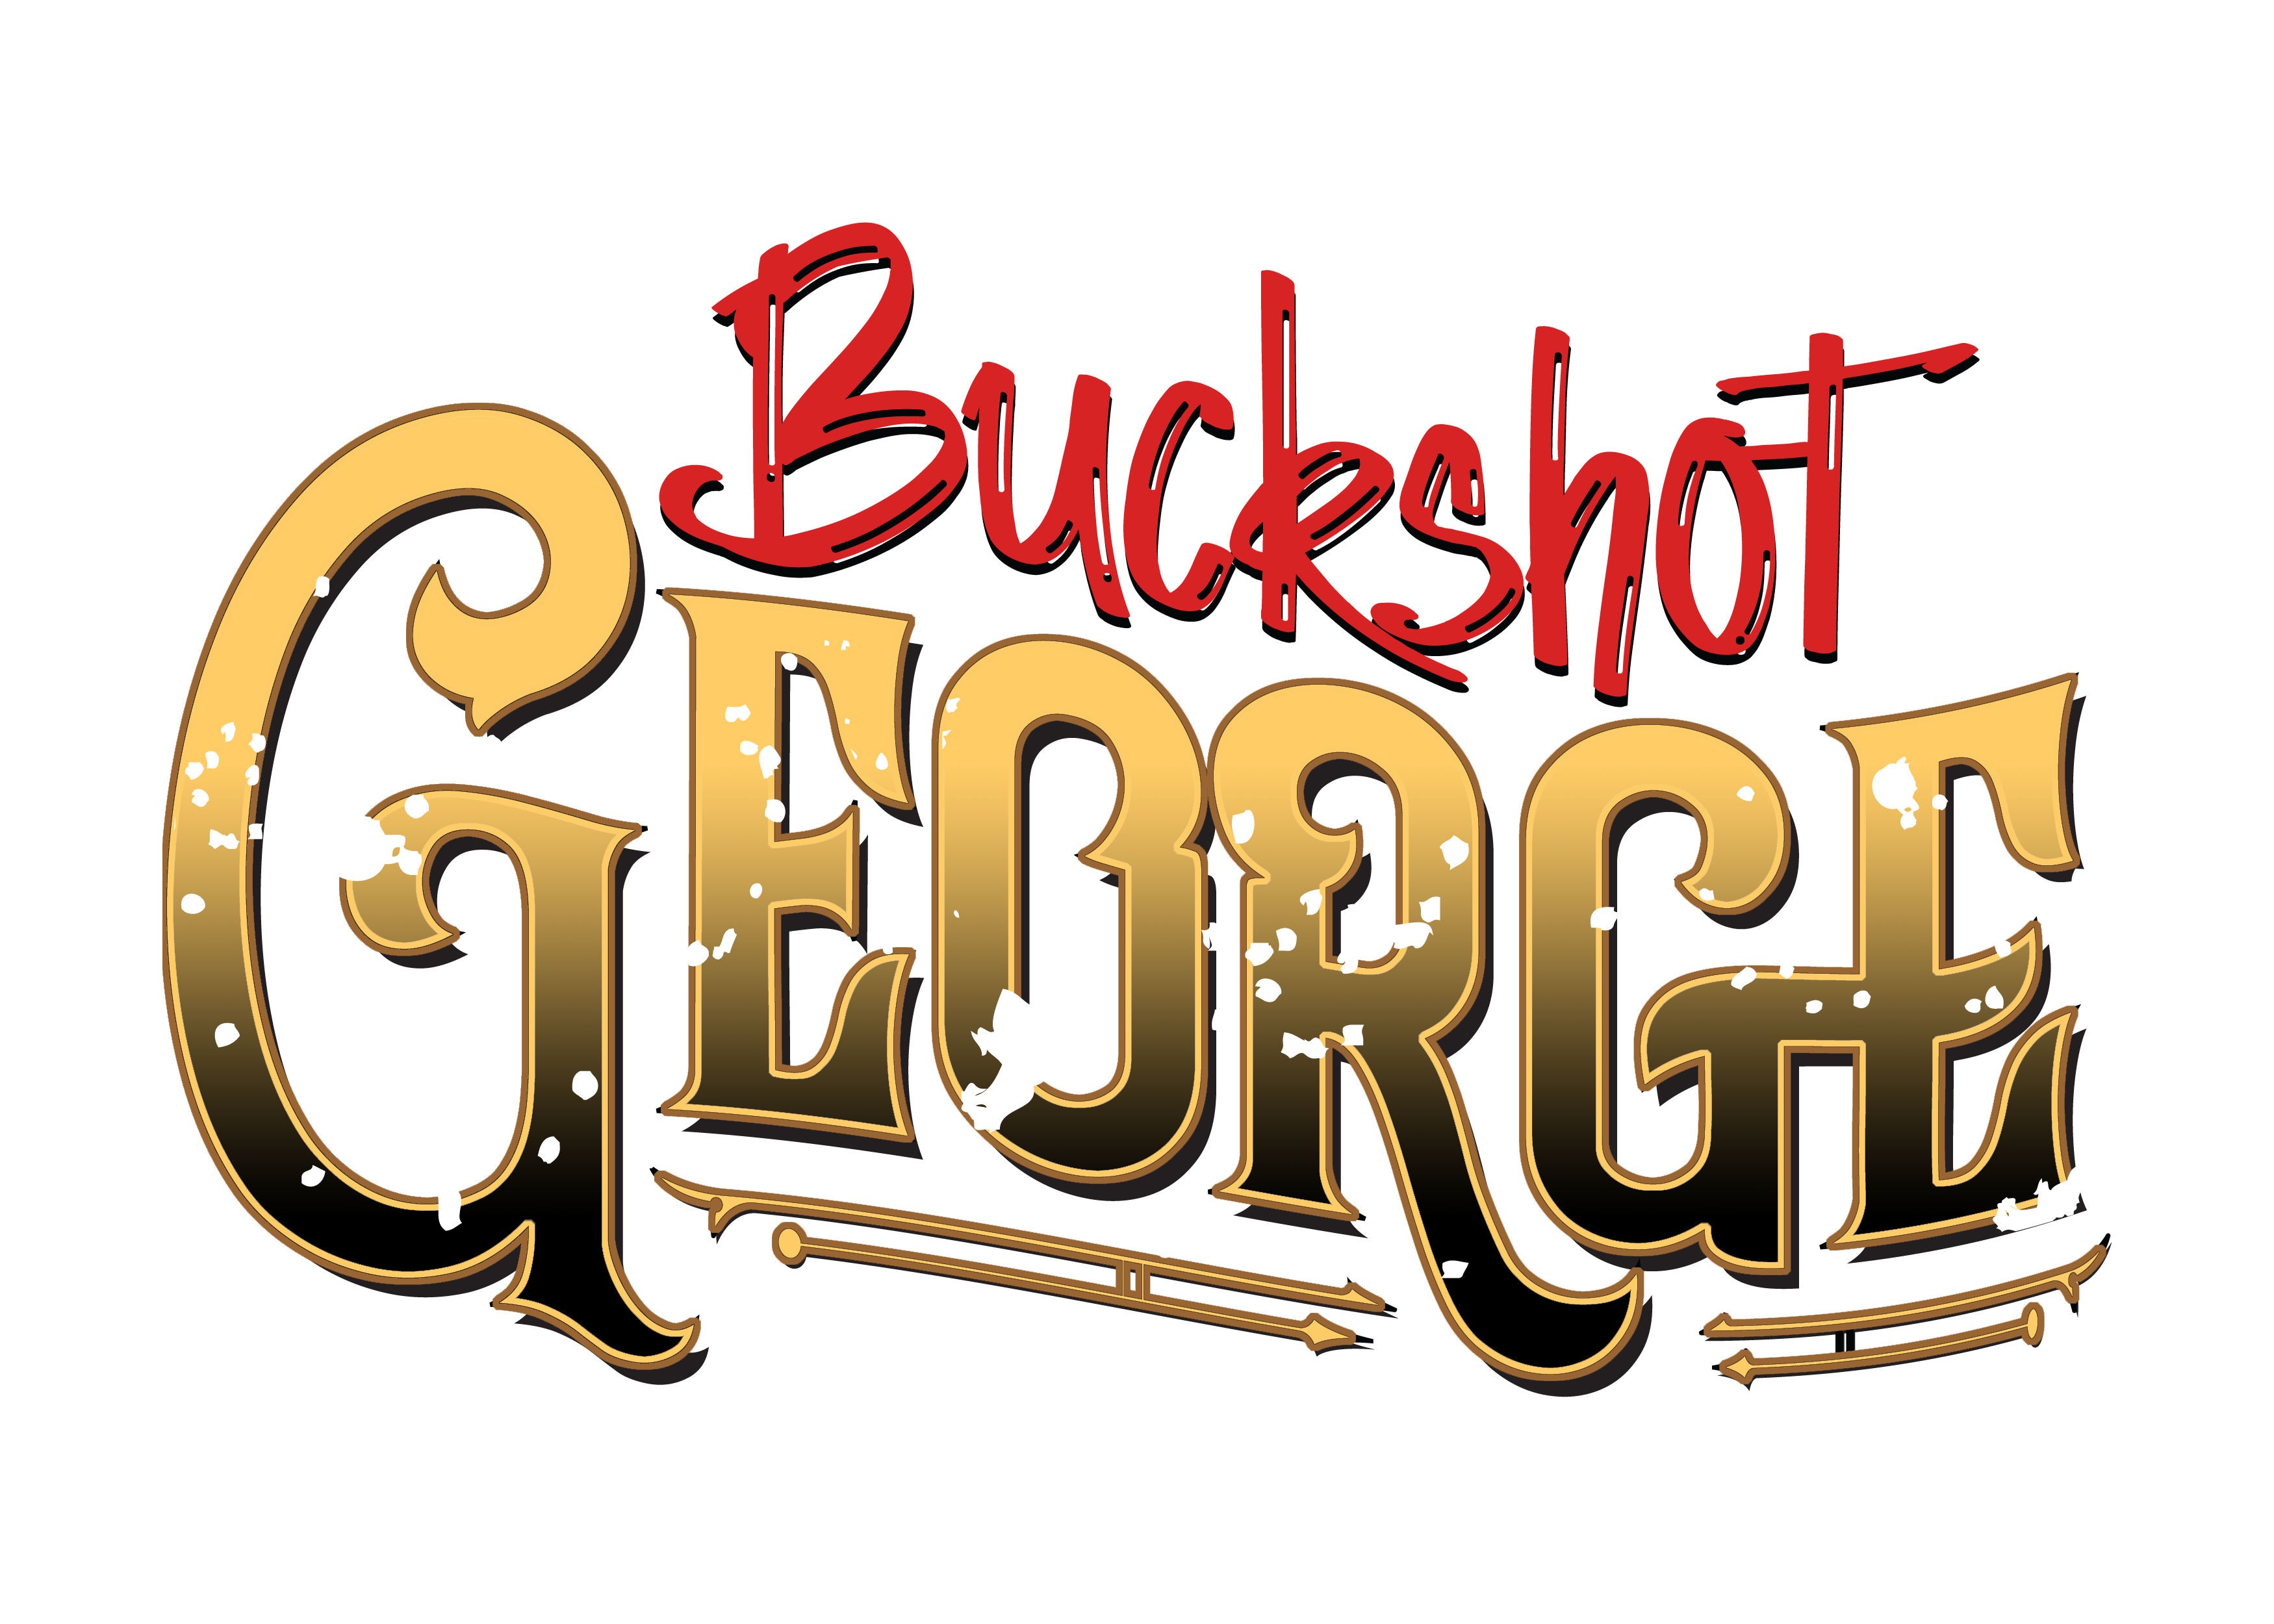 Buckshot George